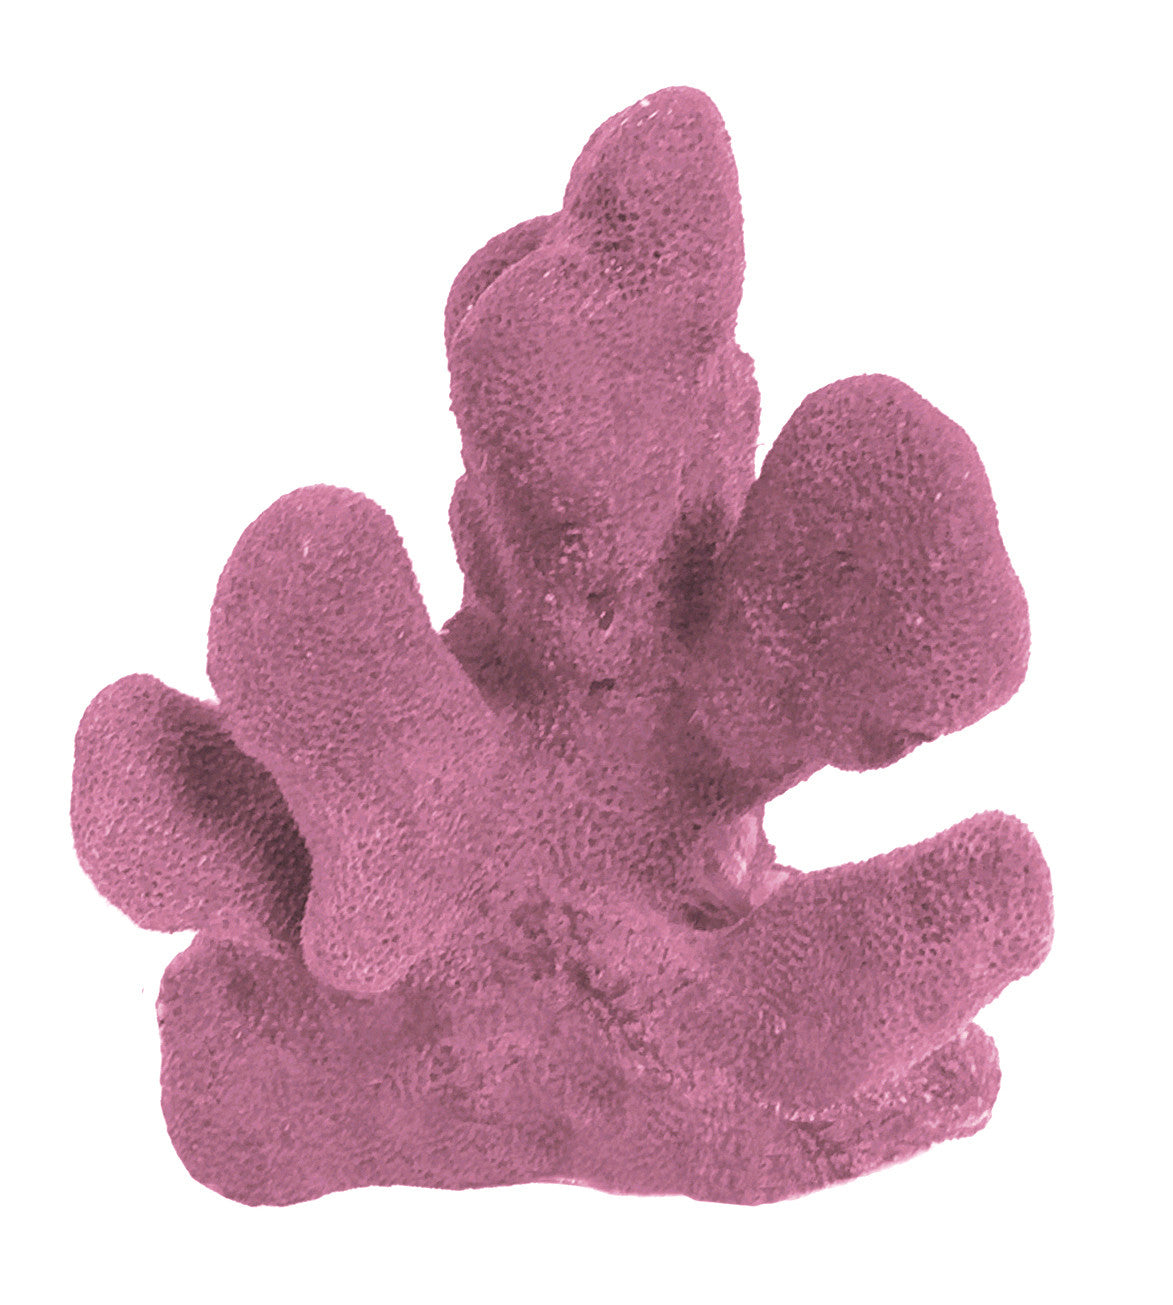 Stylophora Pistillata - Cat's Paw/Club Foot Coral #03103